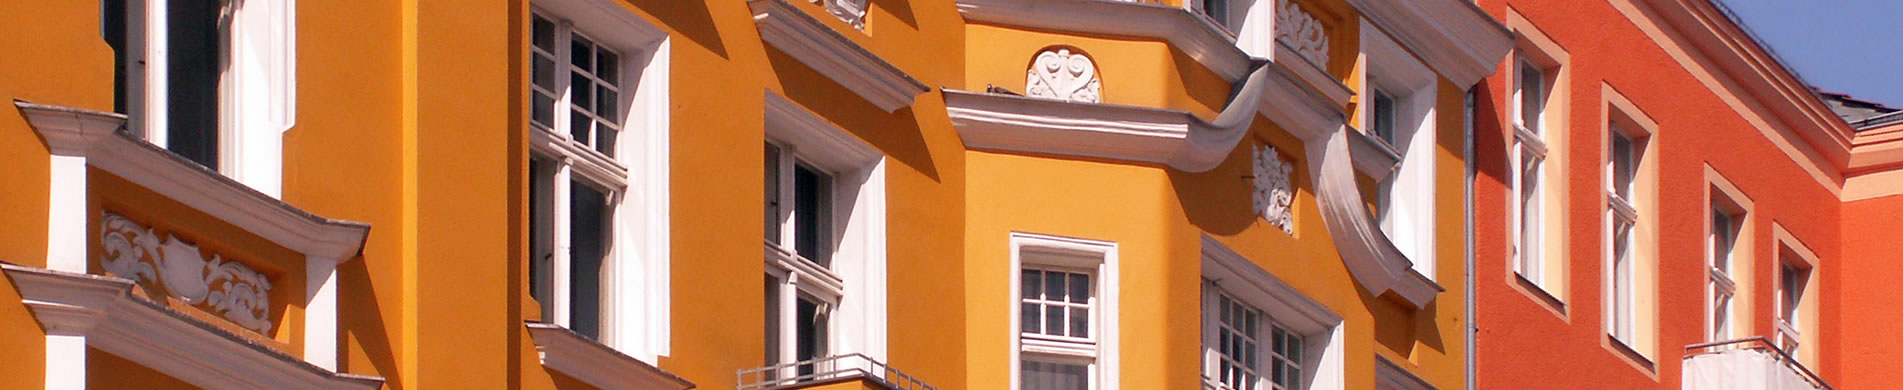 Fassadengestaltung & Fassadensanierung Dresden - Maler Köhler - Malermeister für Fassaden